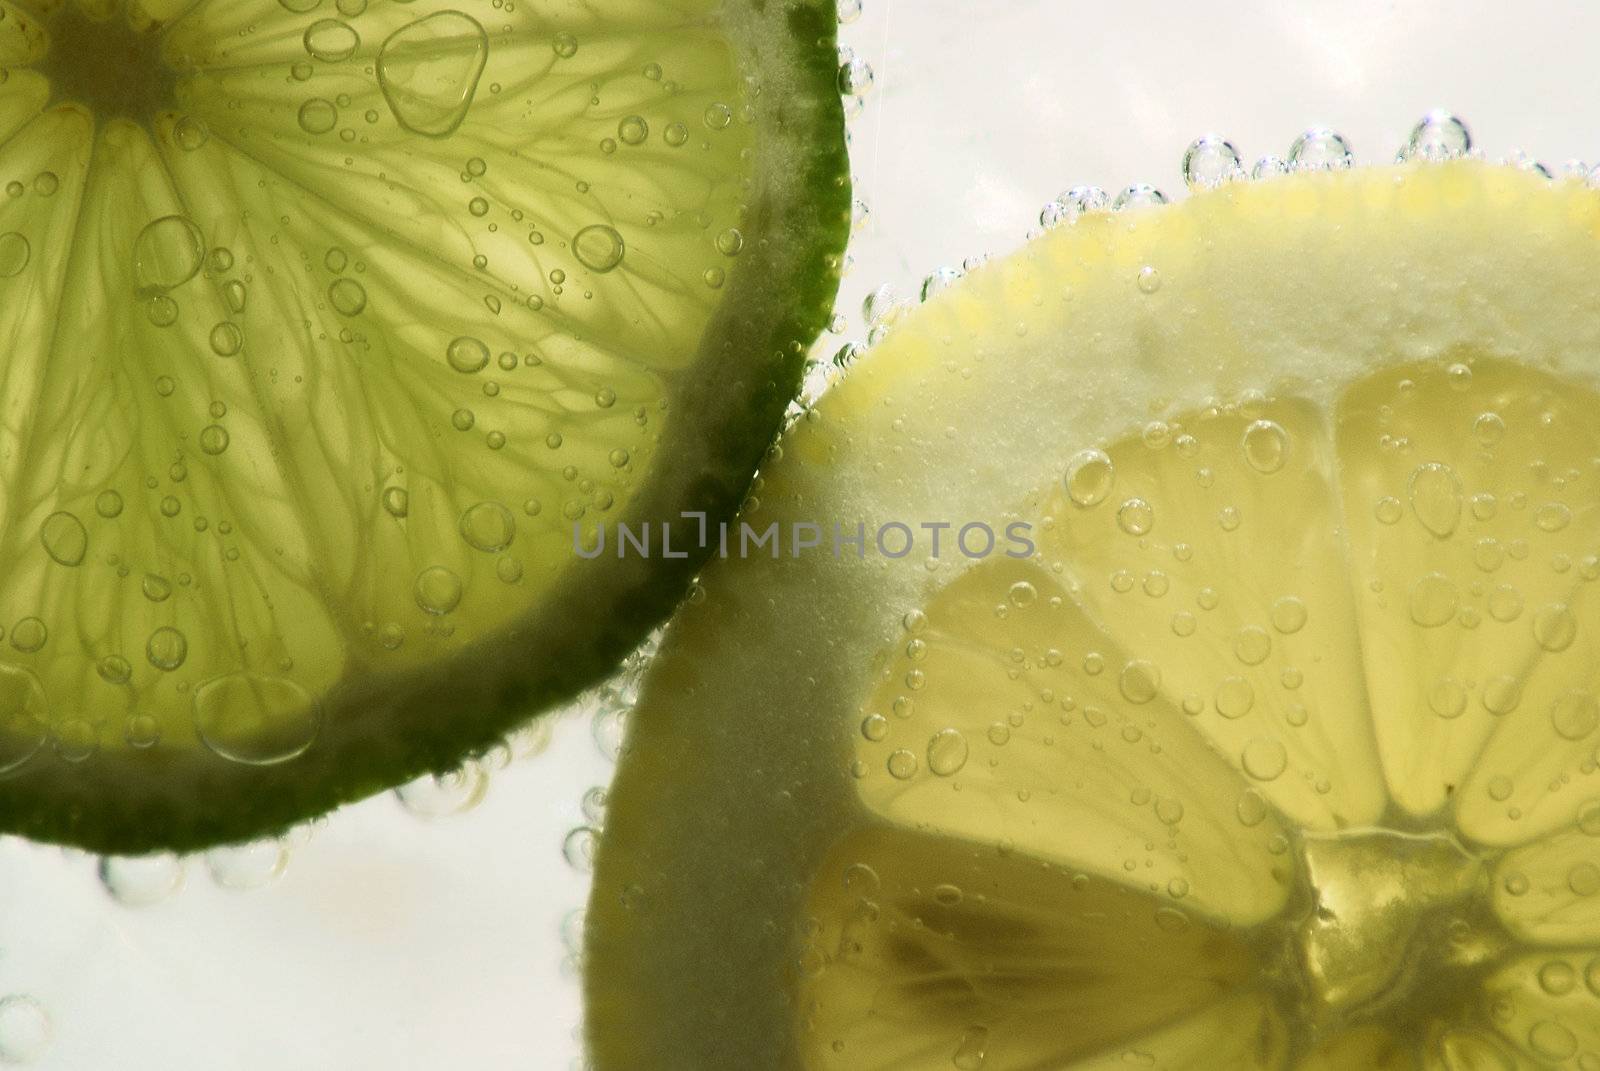 Lemon and Lime Bubbles by stupie